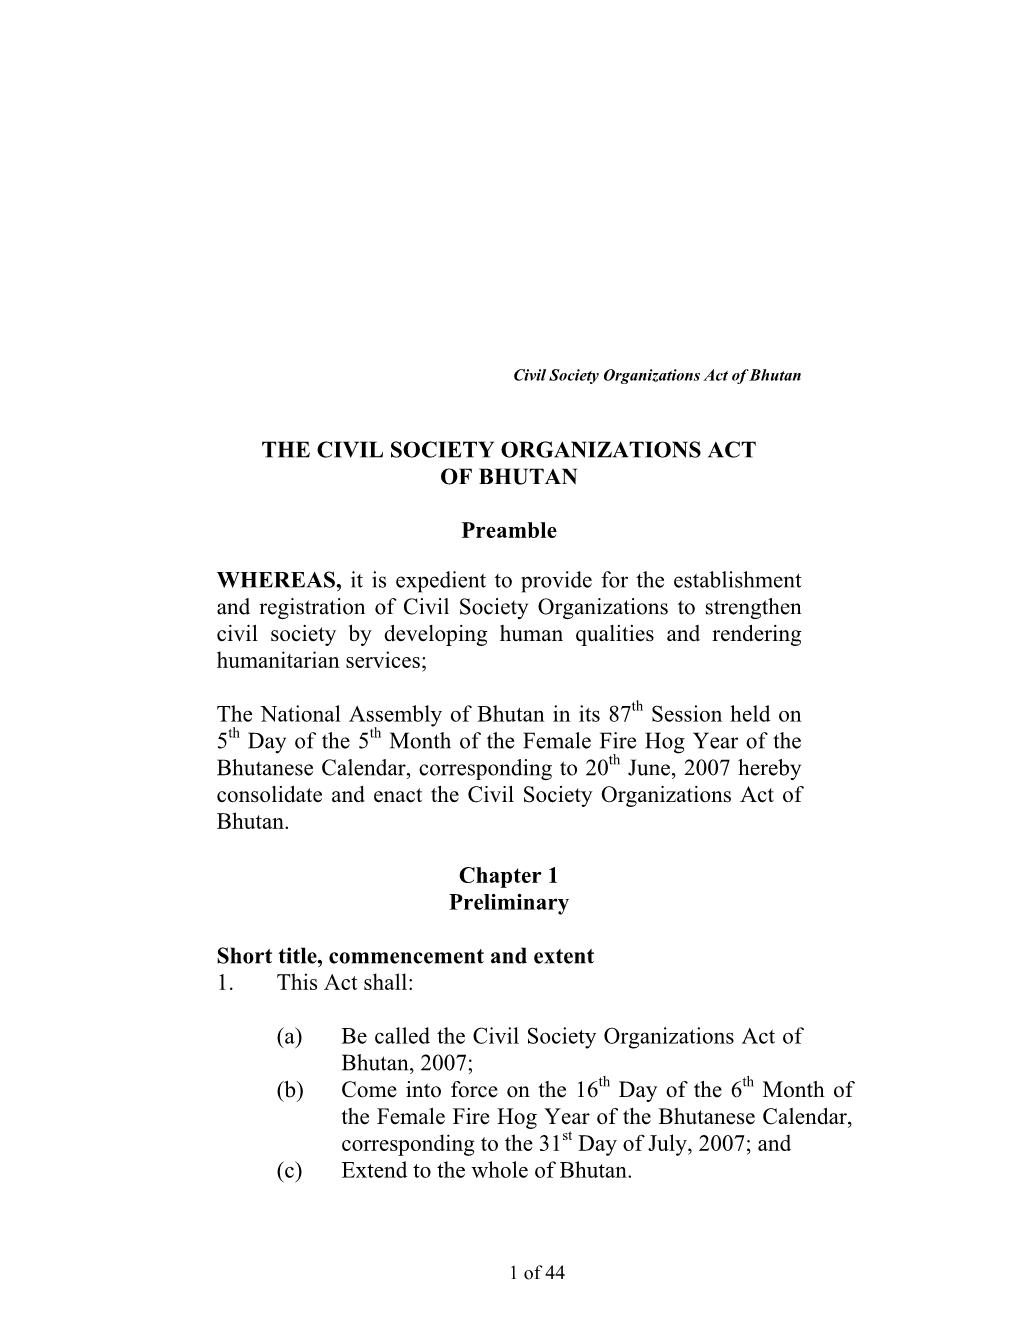 The Civil Society Organizations Act of Bhutan